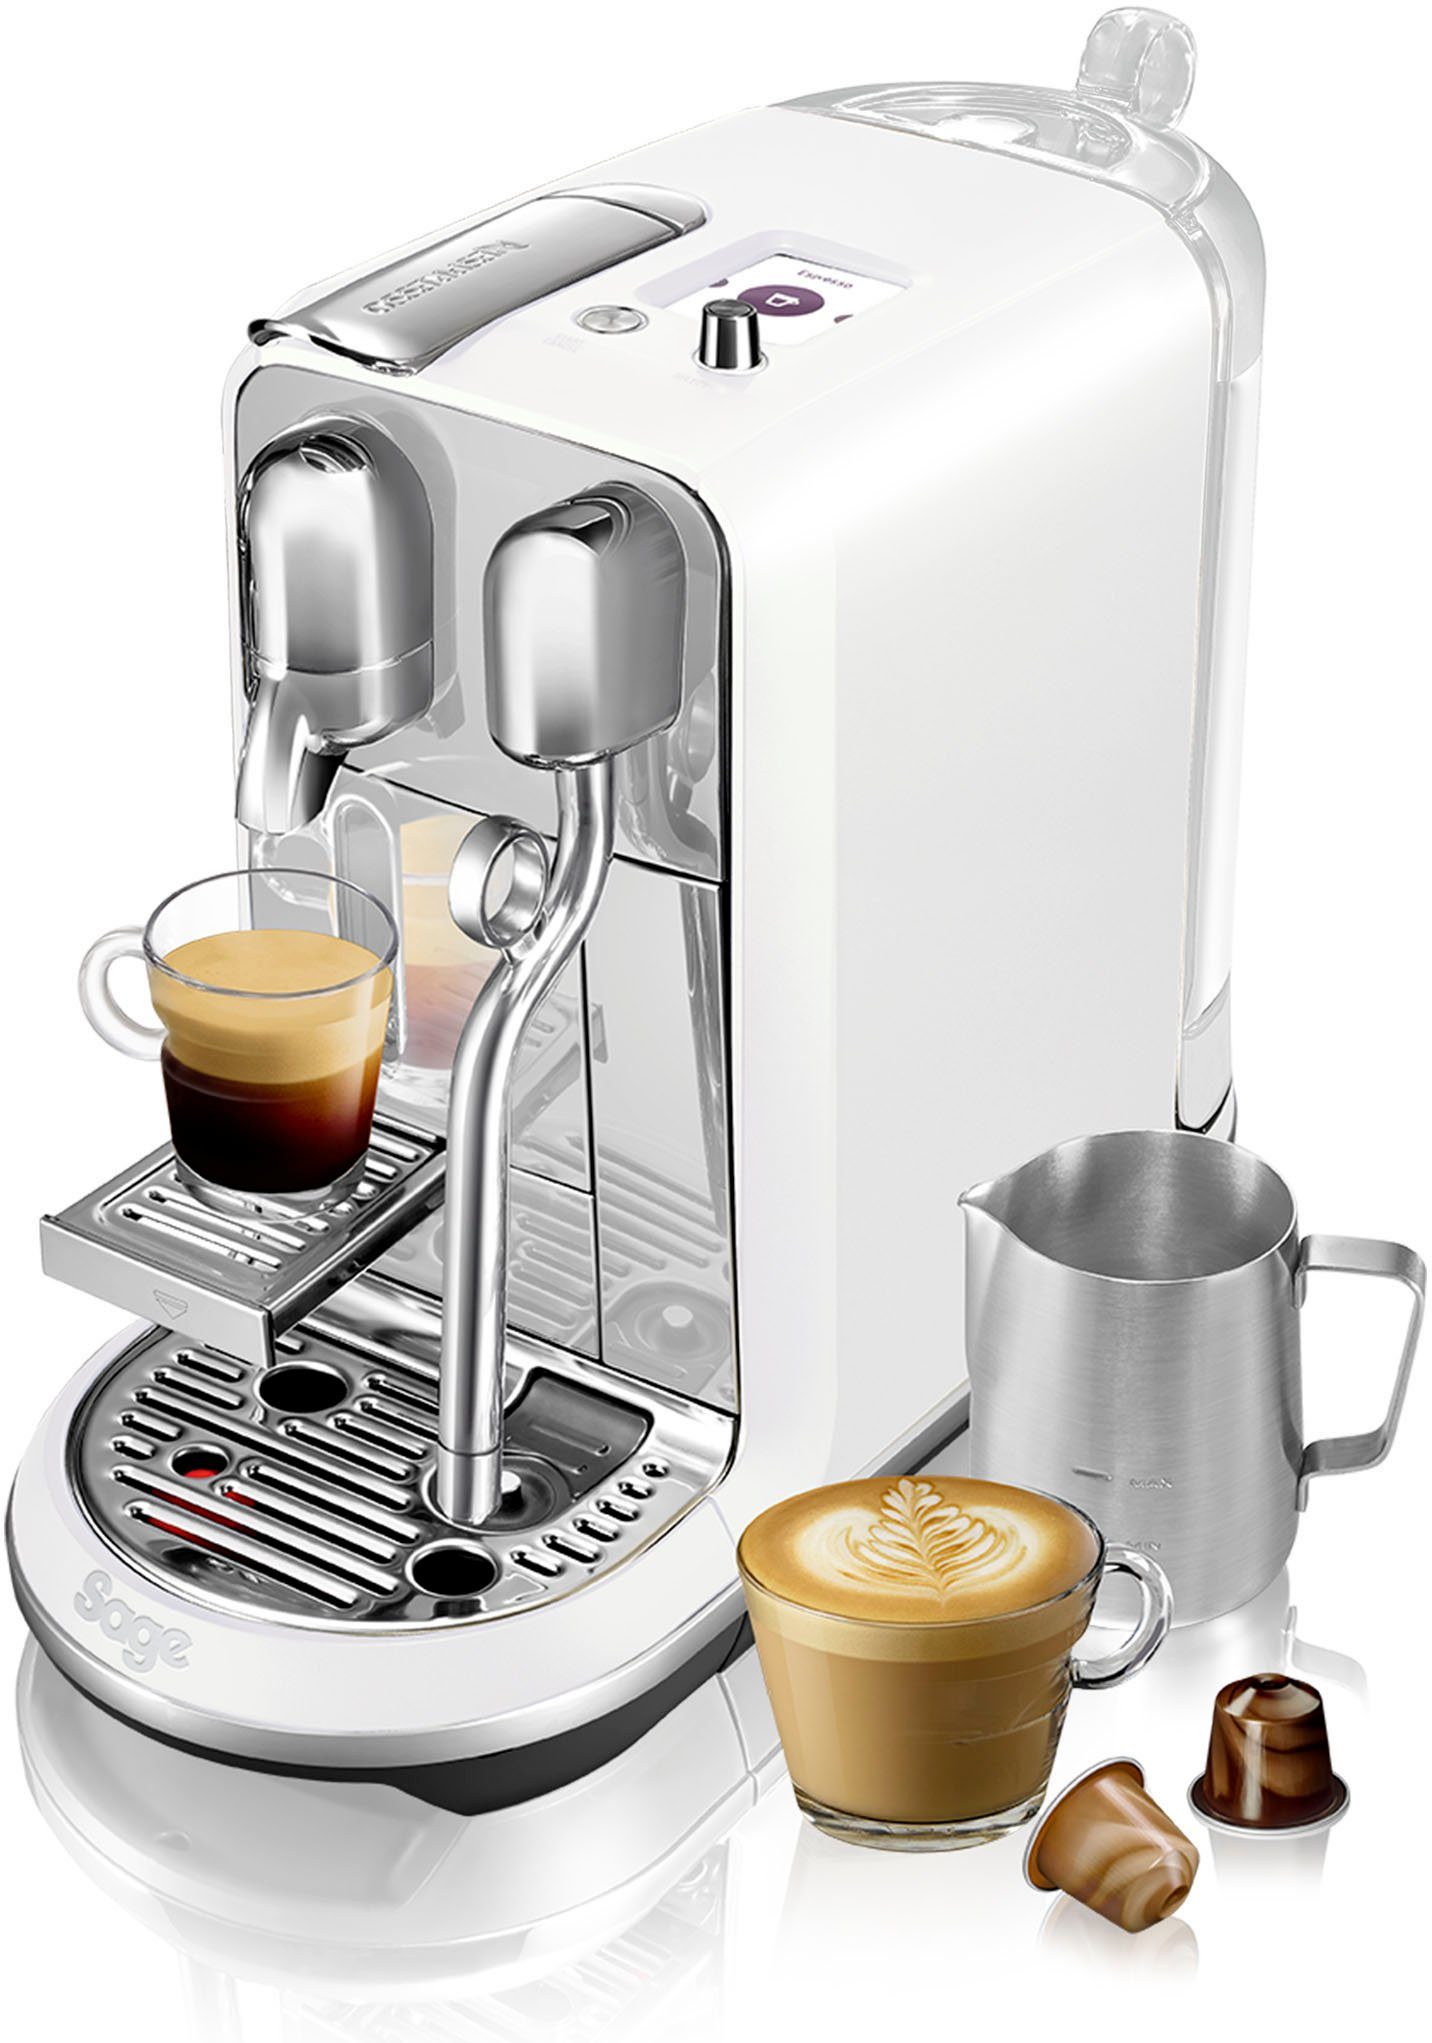 SNE800SST, mit Kapseln inkl. Edelstahl-Milchkanne Plus Willkommenspaket Creatista 7 Nespresso + Kapselmaschine